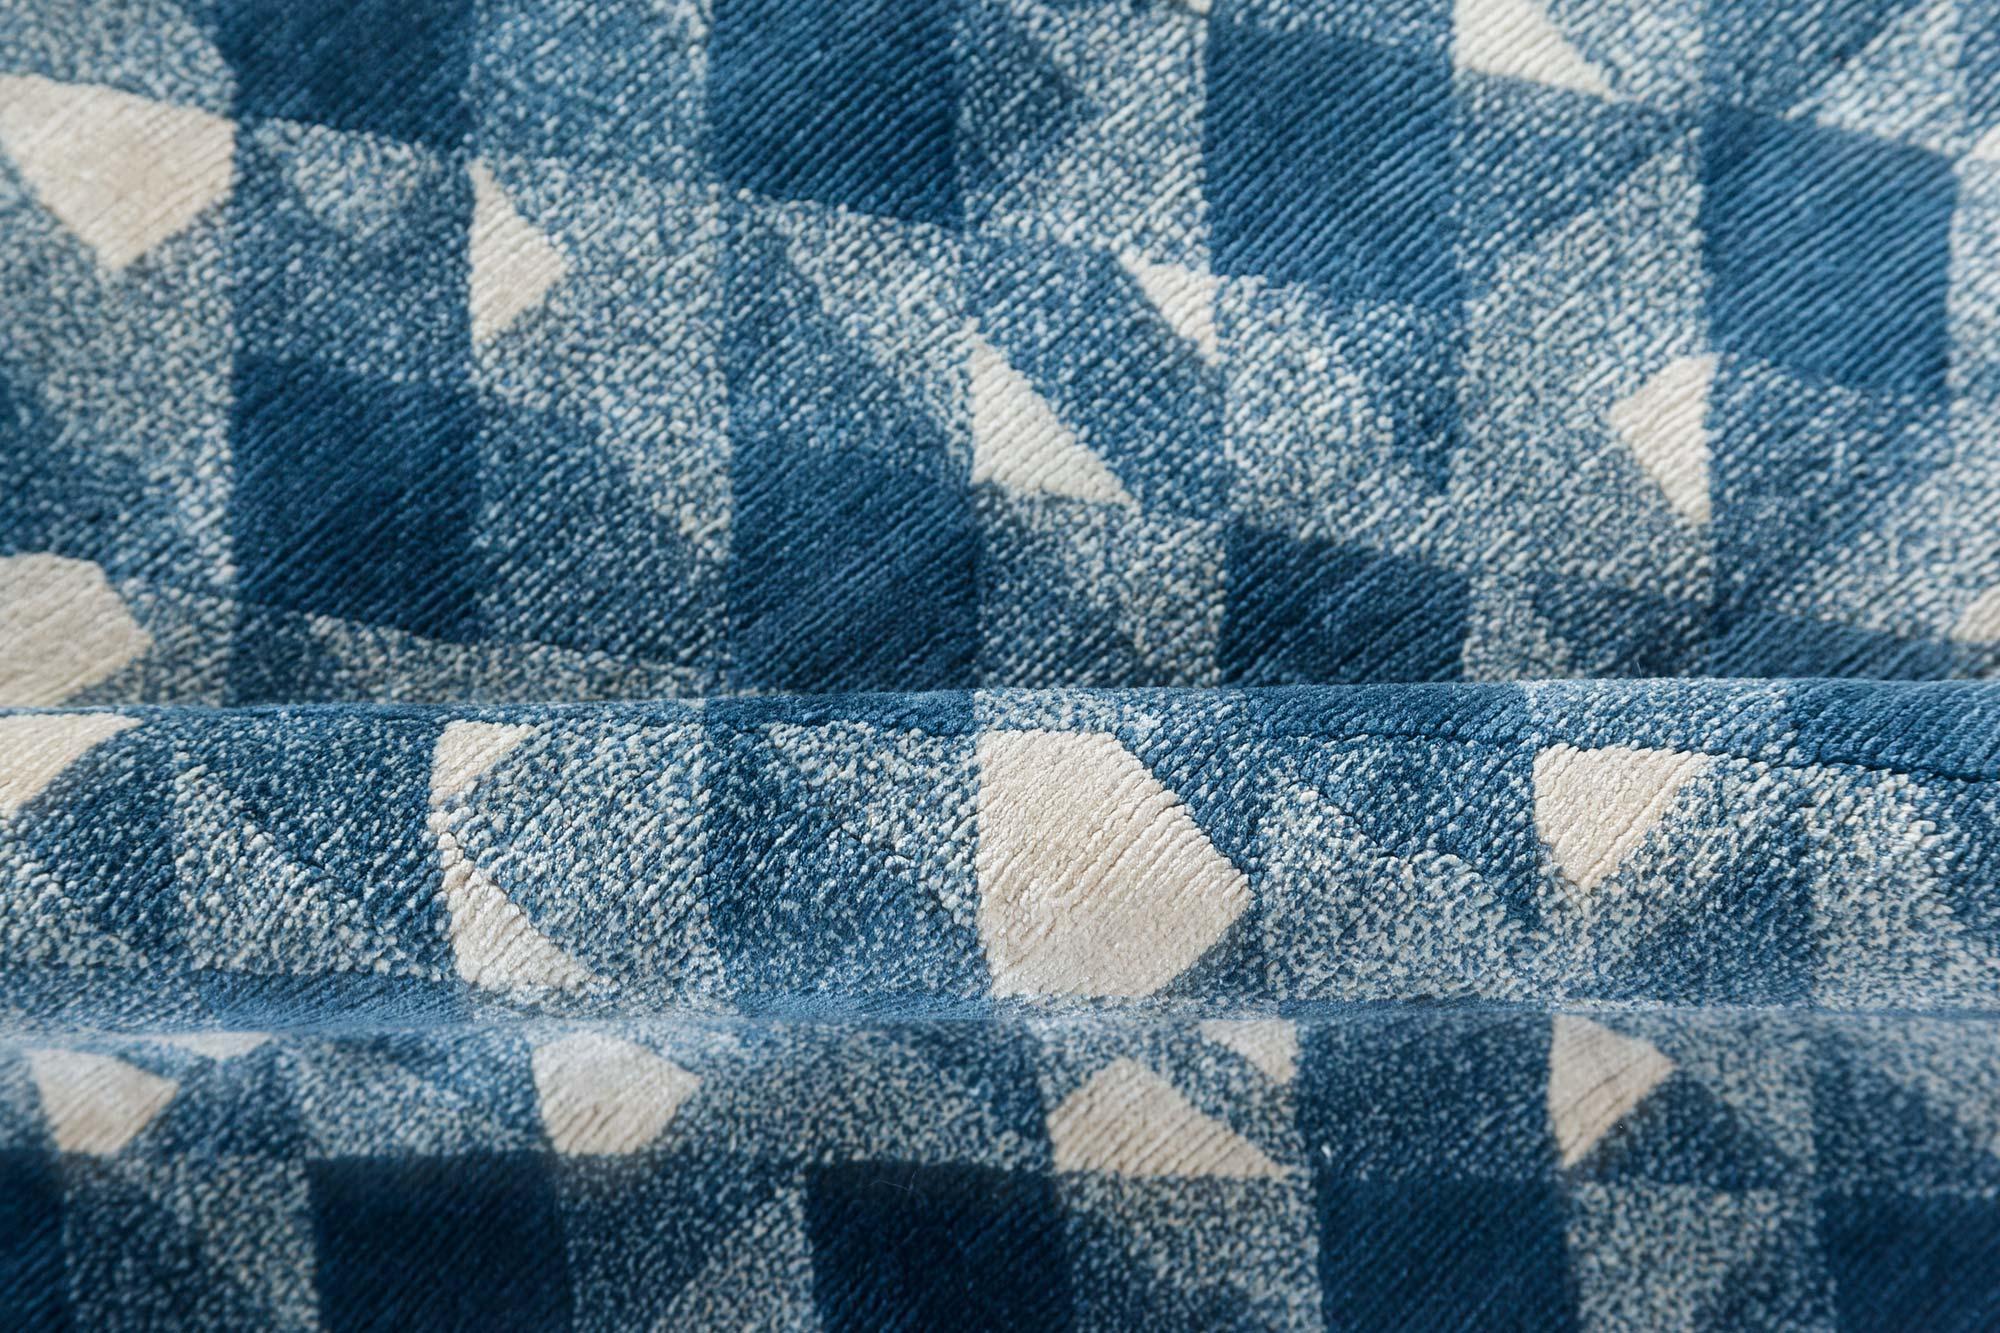 Art Deco Style rhombus blue and white handmade silk rug by Doris Leslie Blau.
Size: 12'2